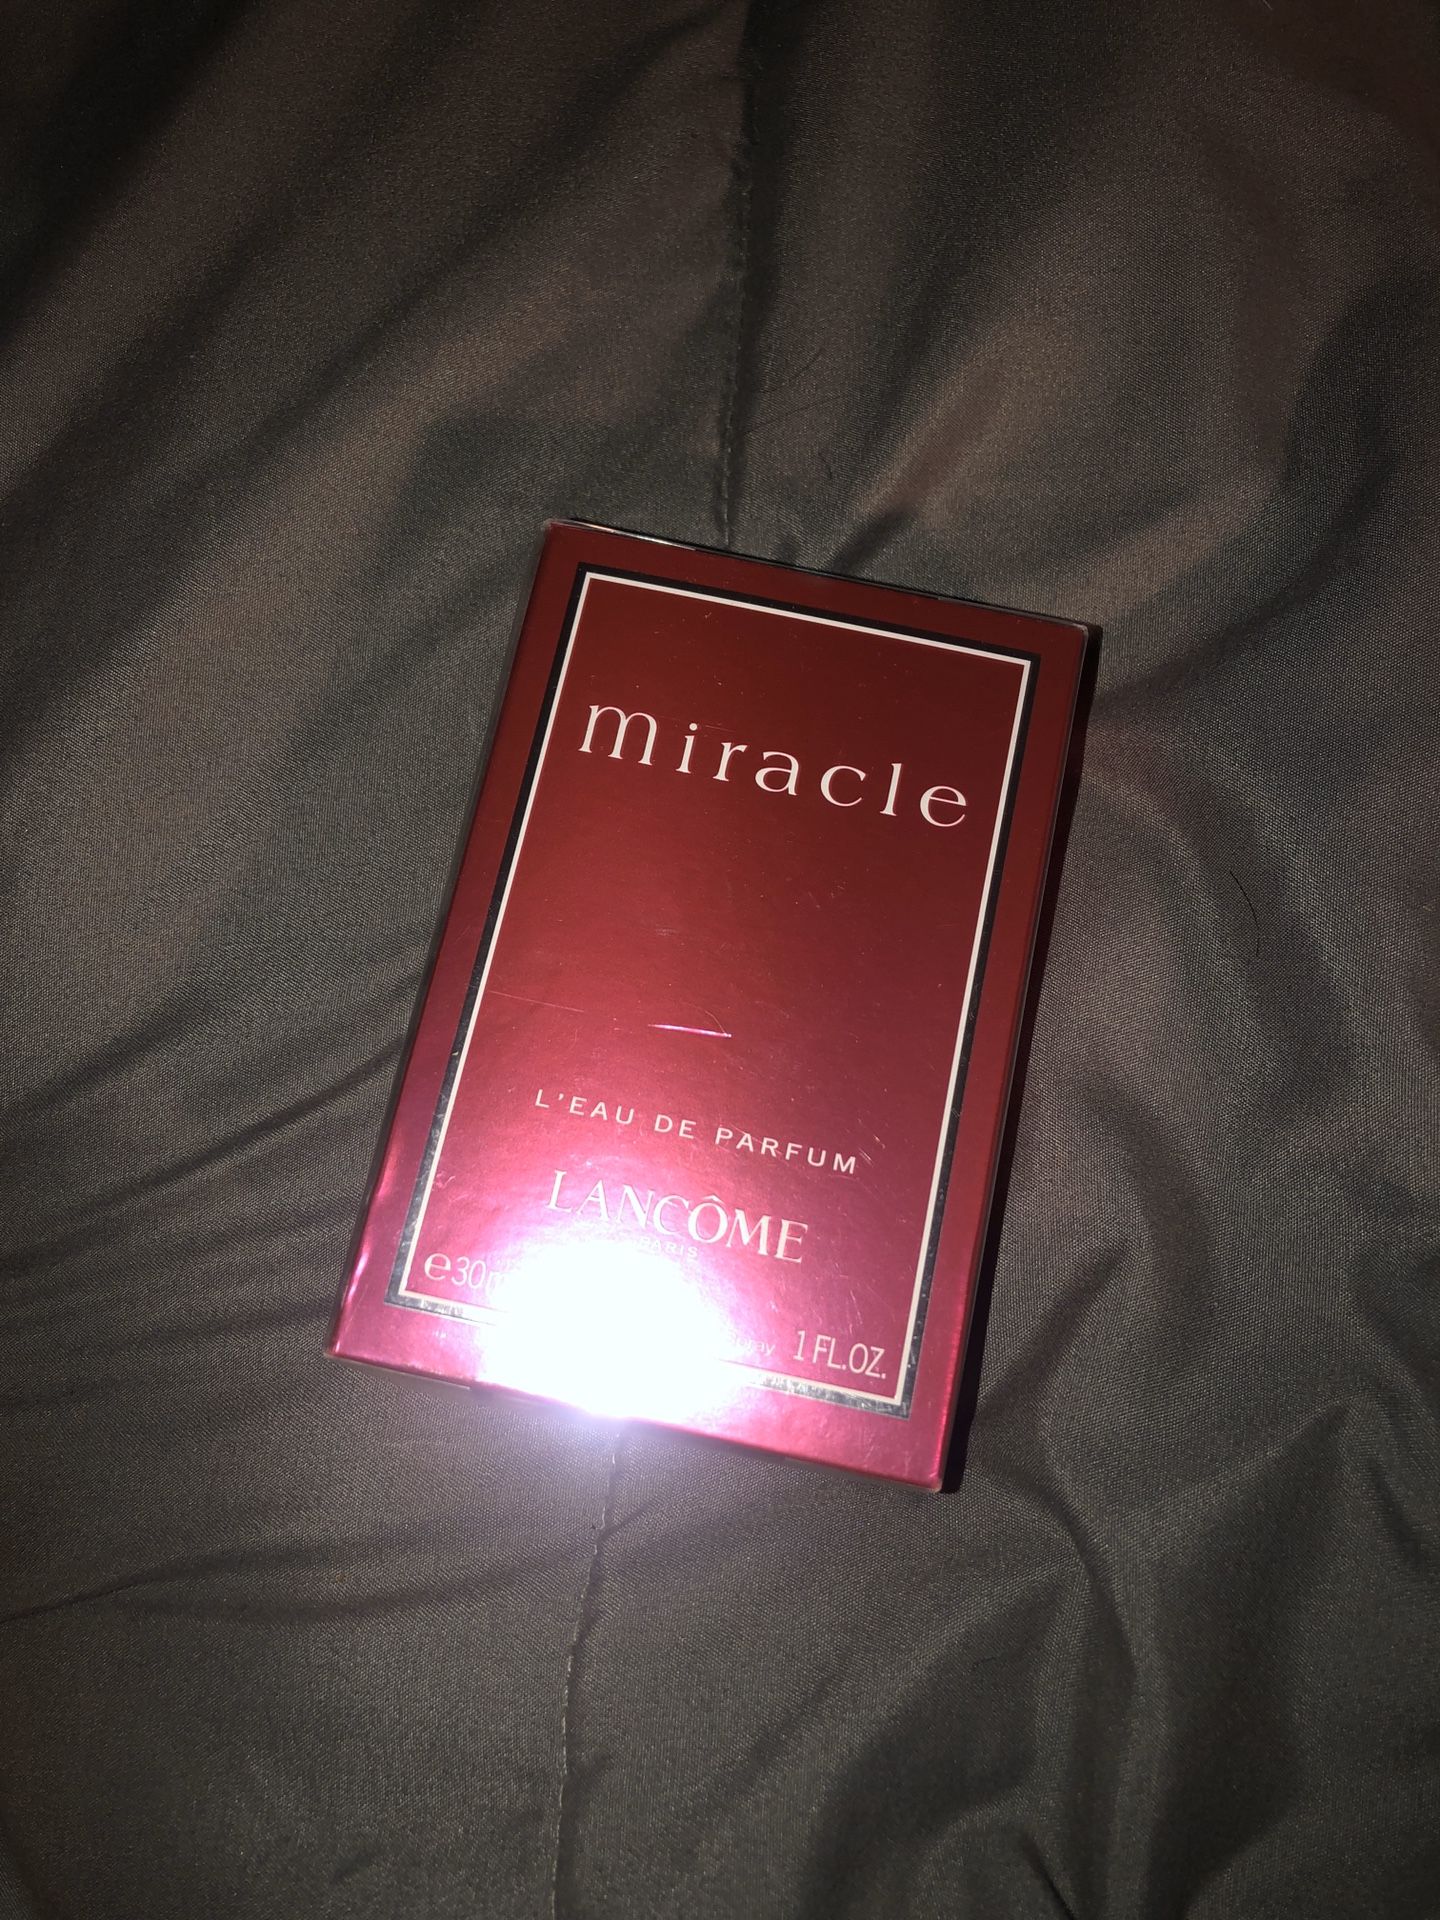 Miracle Lancôme perfume